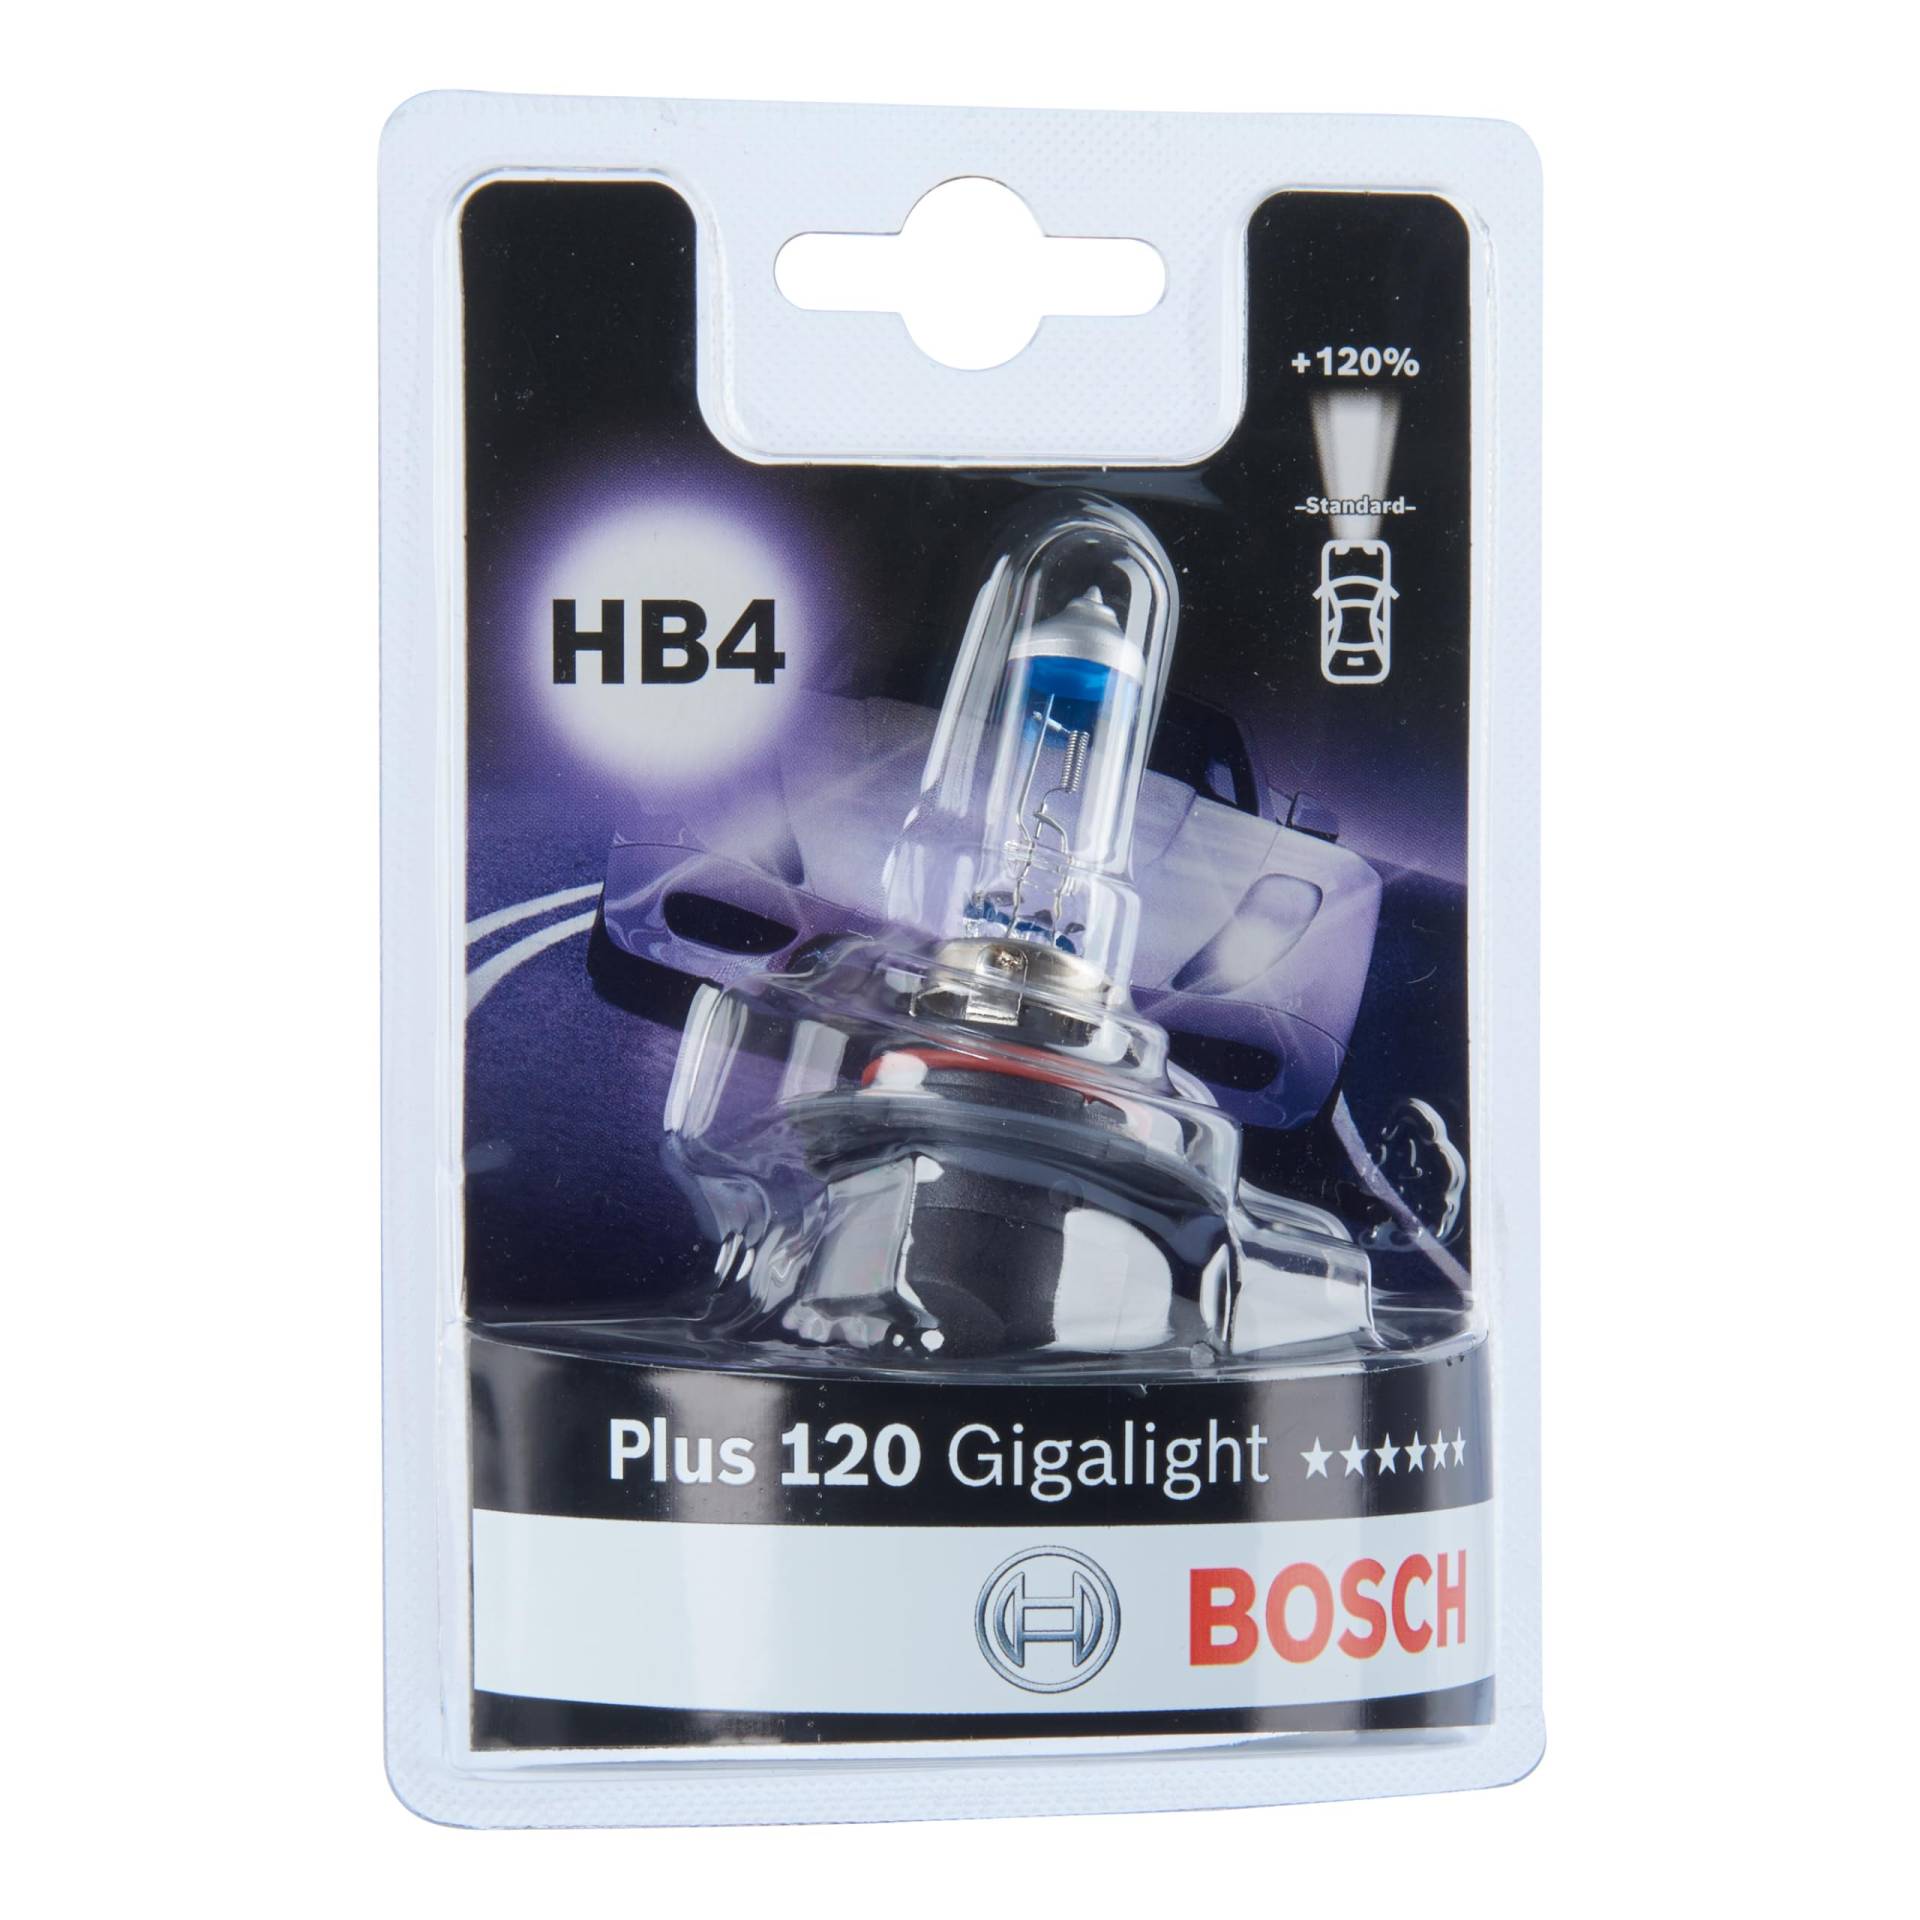 Bosch HB4 Plus 120 Gigalight Lampe - 12 V 51 W P22d - 1 Stück von Bosch